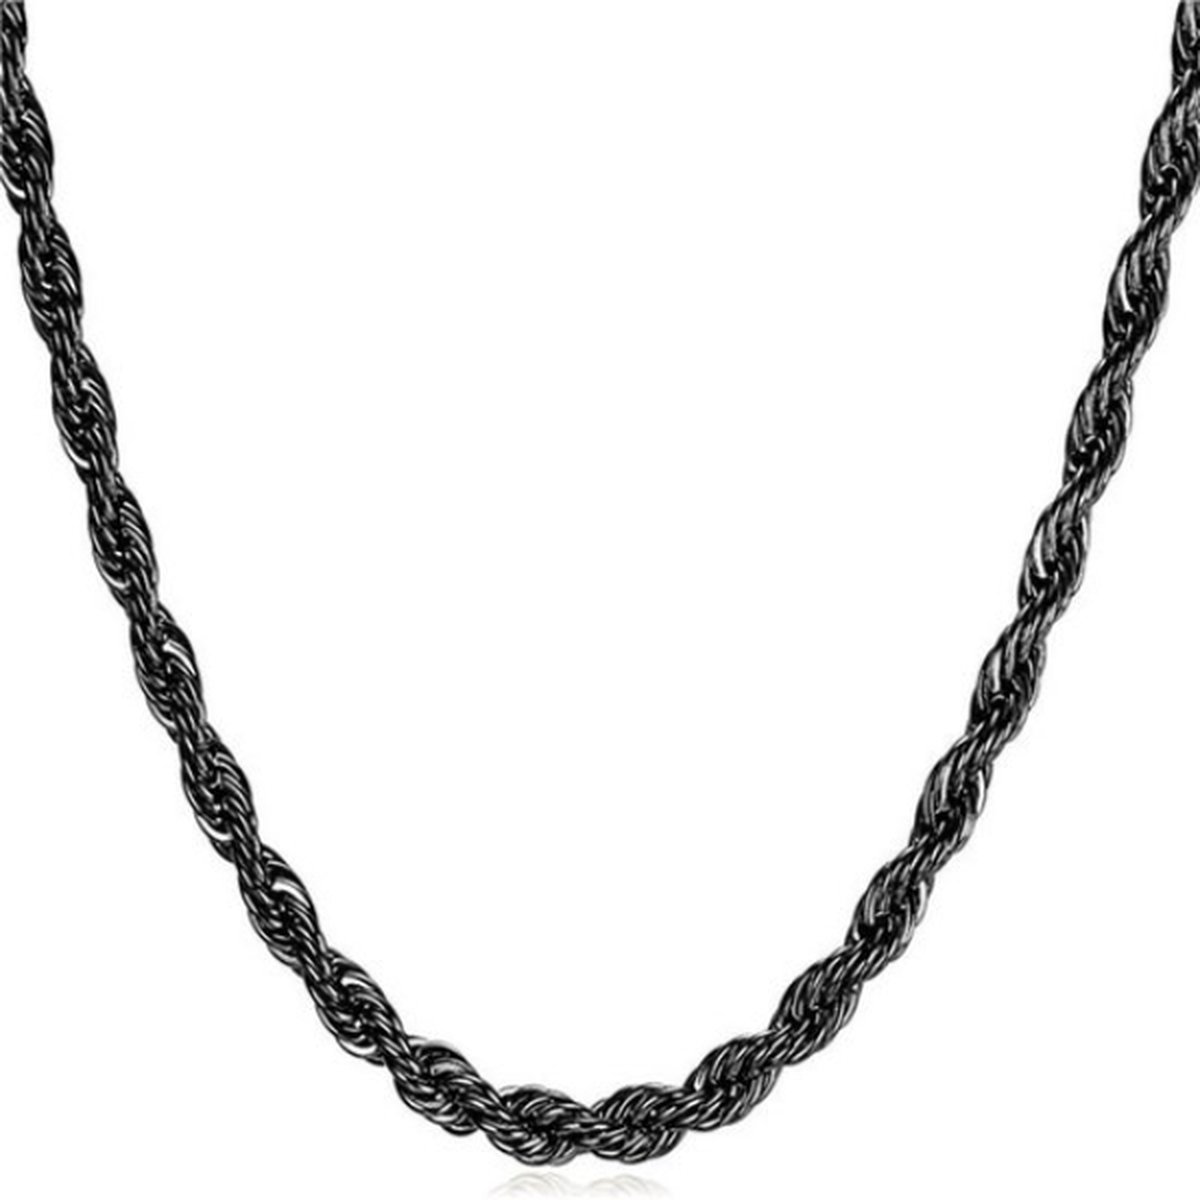 Plux Fashion Rope Ketting - Zwart - 3mm/60cm - Sieraden - Zwarte Ketting - Rope Chain - Stainless Steel - Ketting - HipHop Ketting - Schakel Ketting - Sieraden Cadeau - Luxe Style - Duurzame Kwaliteit - Moederdag Cadeau - Vaderdag Cadeau